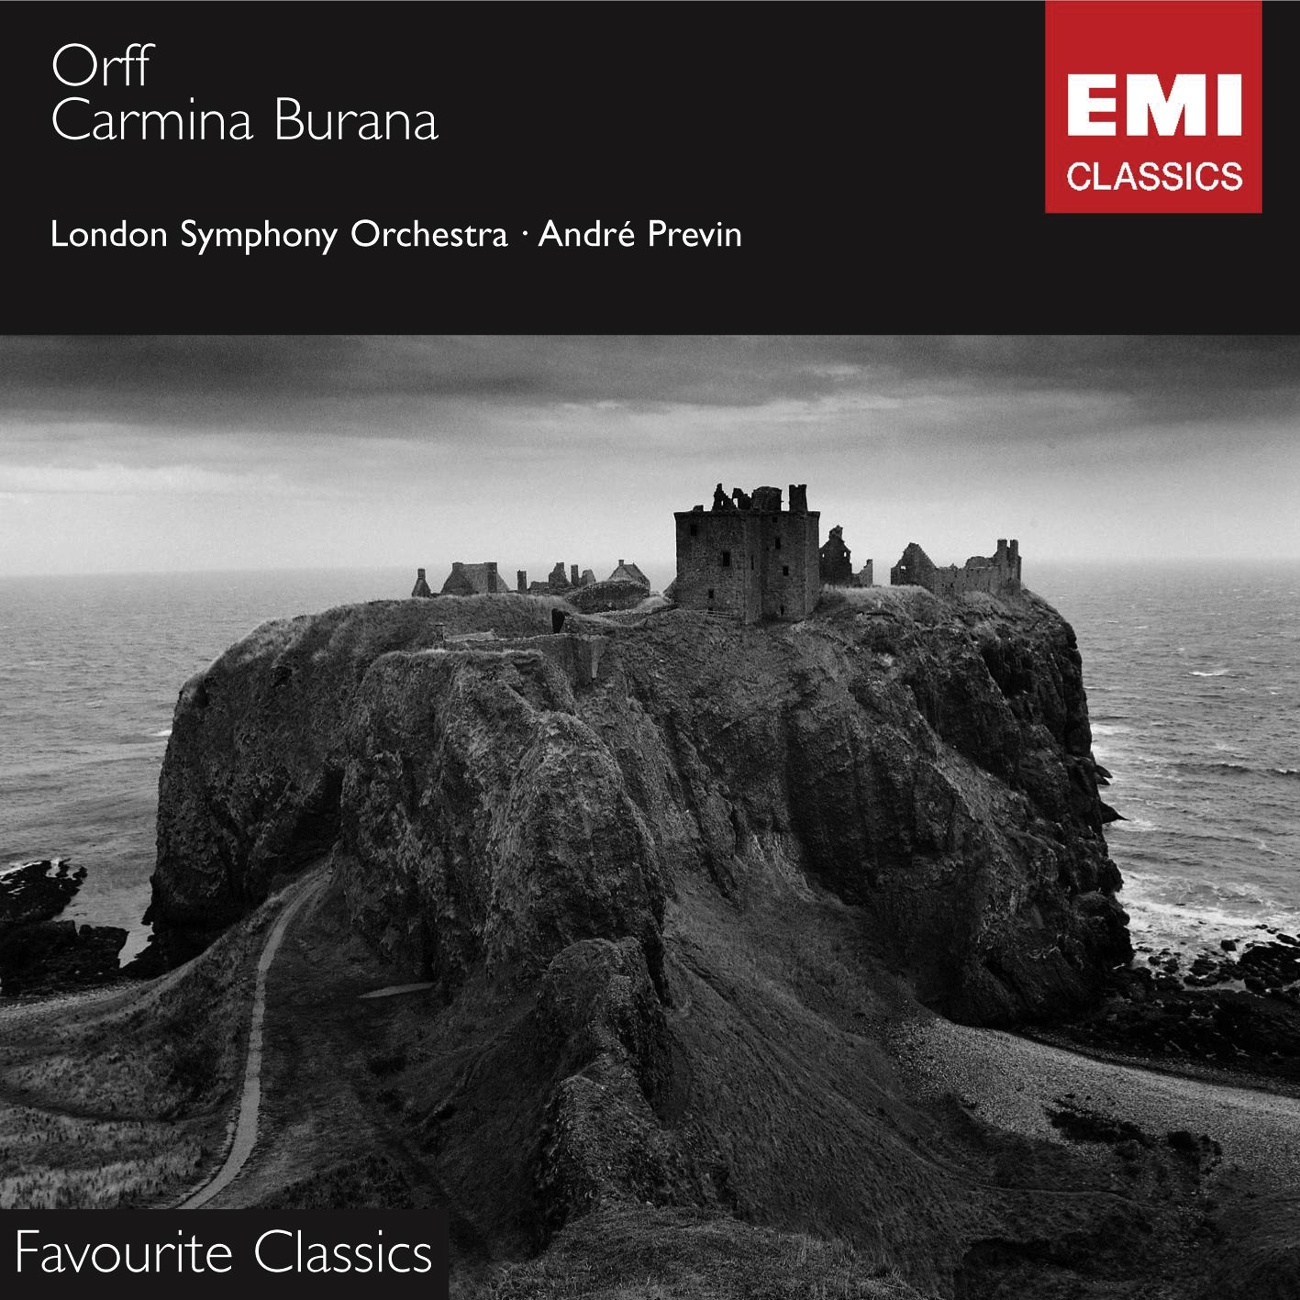 Carmina Burana - Cantiones profanae (1997 Digital Remaster), II - In taberna: No. 13 - Ego sum abbas